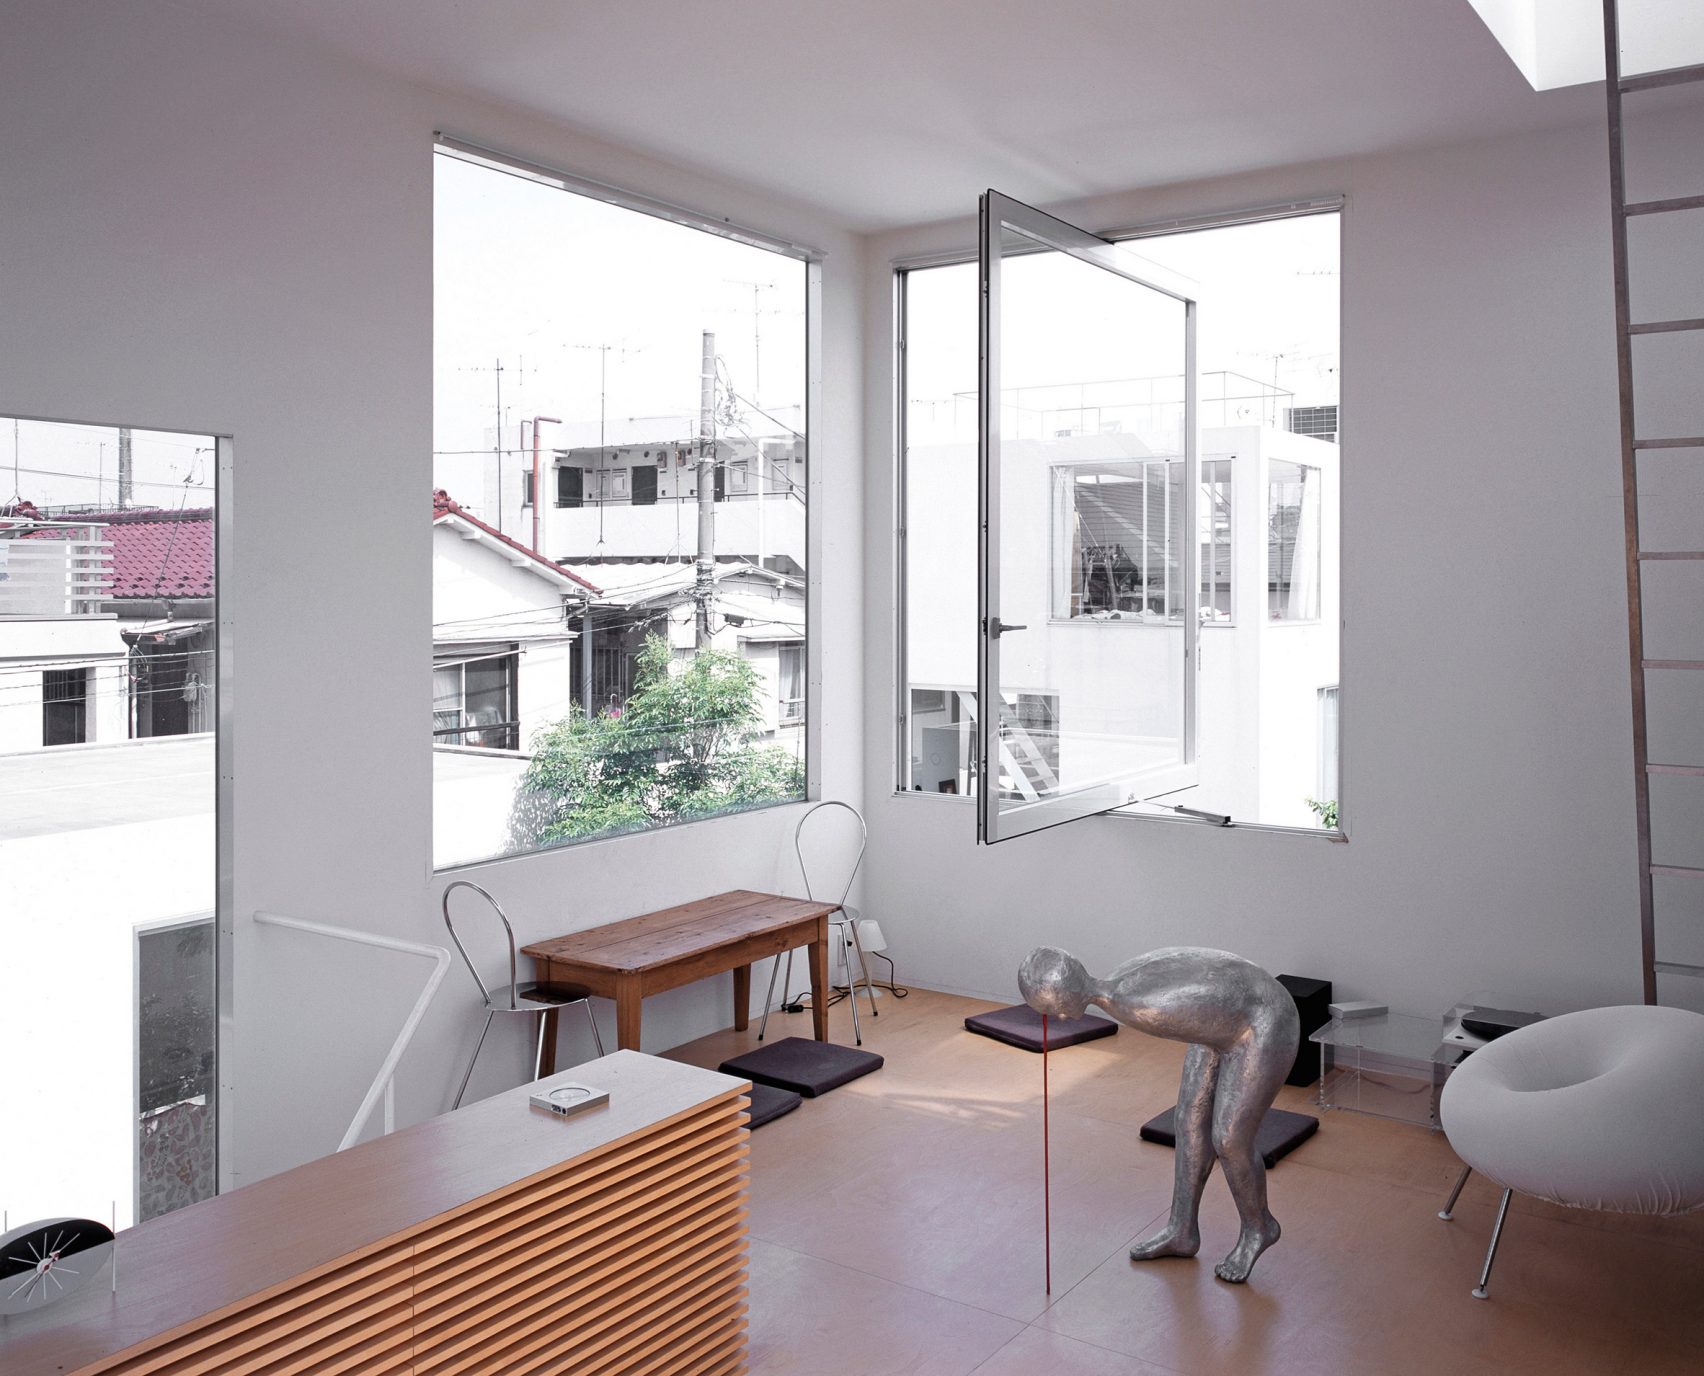 moriyama-house-photos-edmund-sumner-architecture-photography-residential-japan_dezeen_2364_col_11-1704x1376